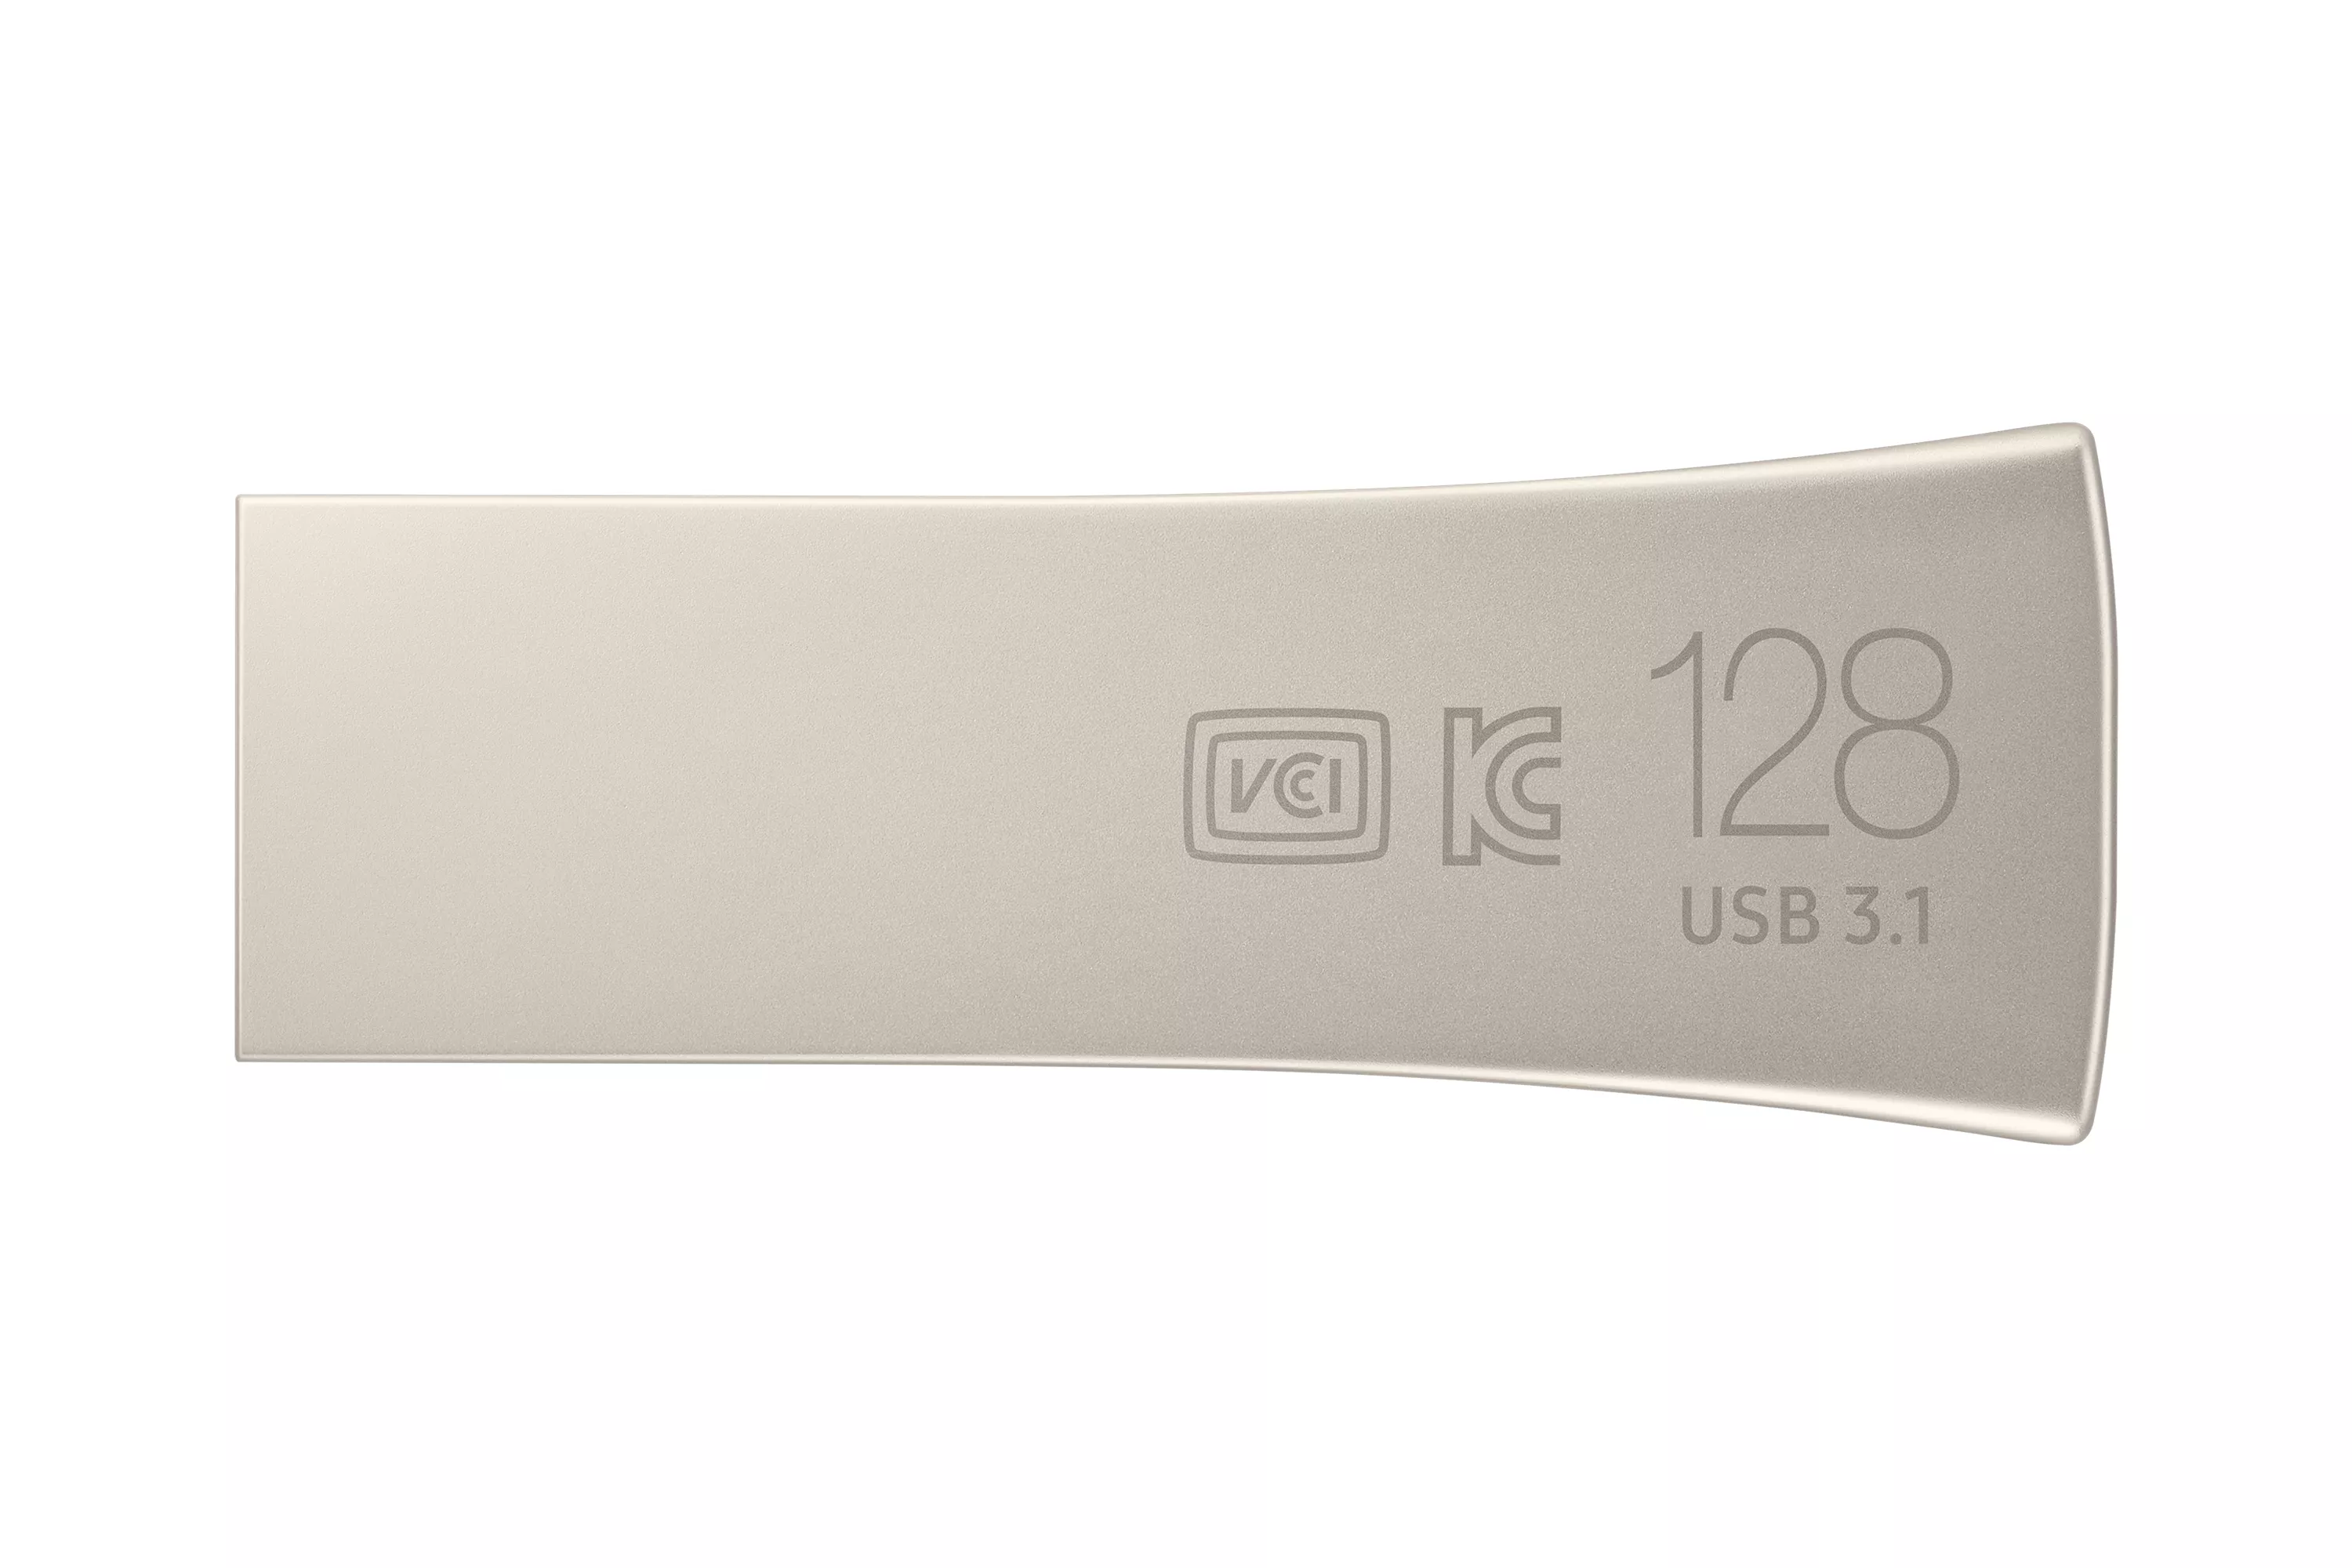 Vente SAMSUNG BAR PLUS 128Go USB 3.1 Champagne Silver Samsung au meilleur prix - visuel 2